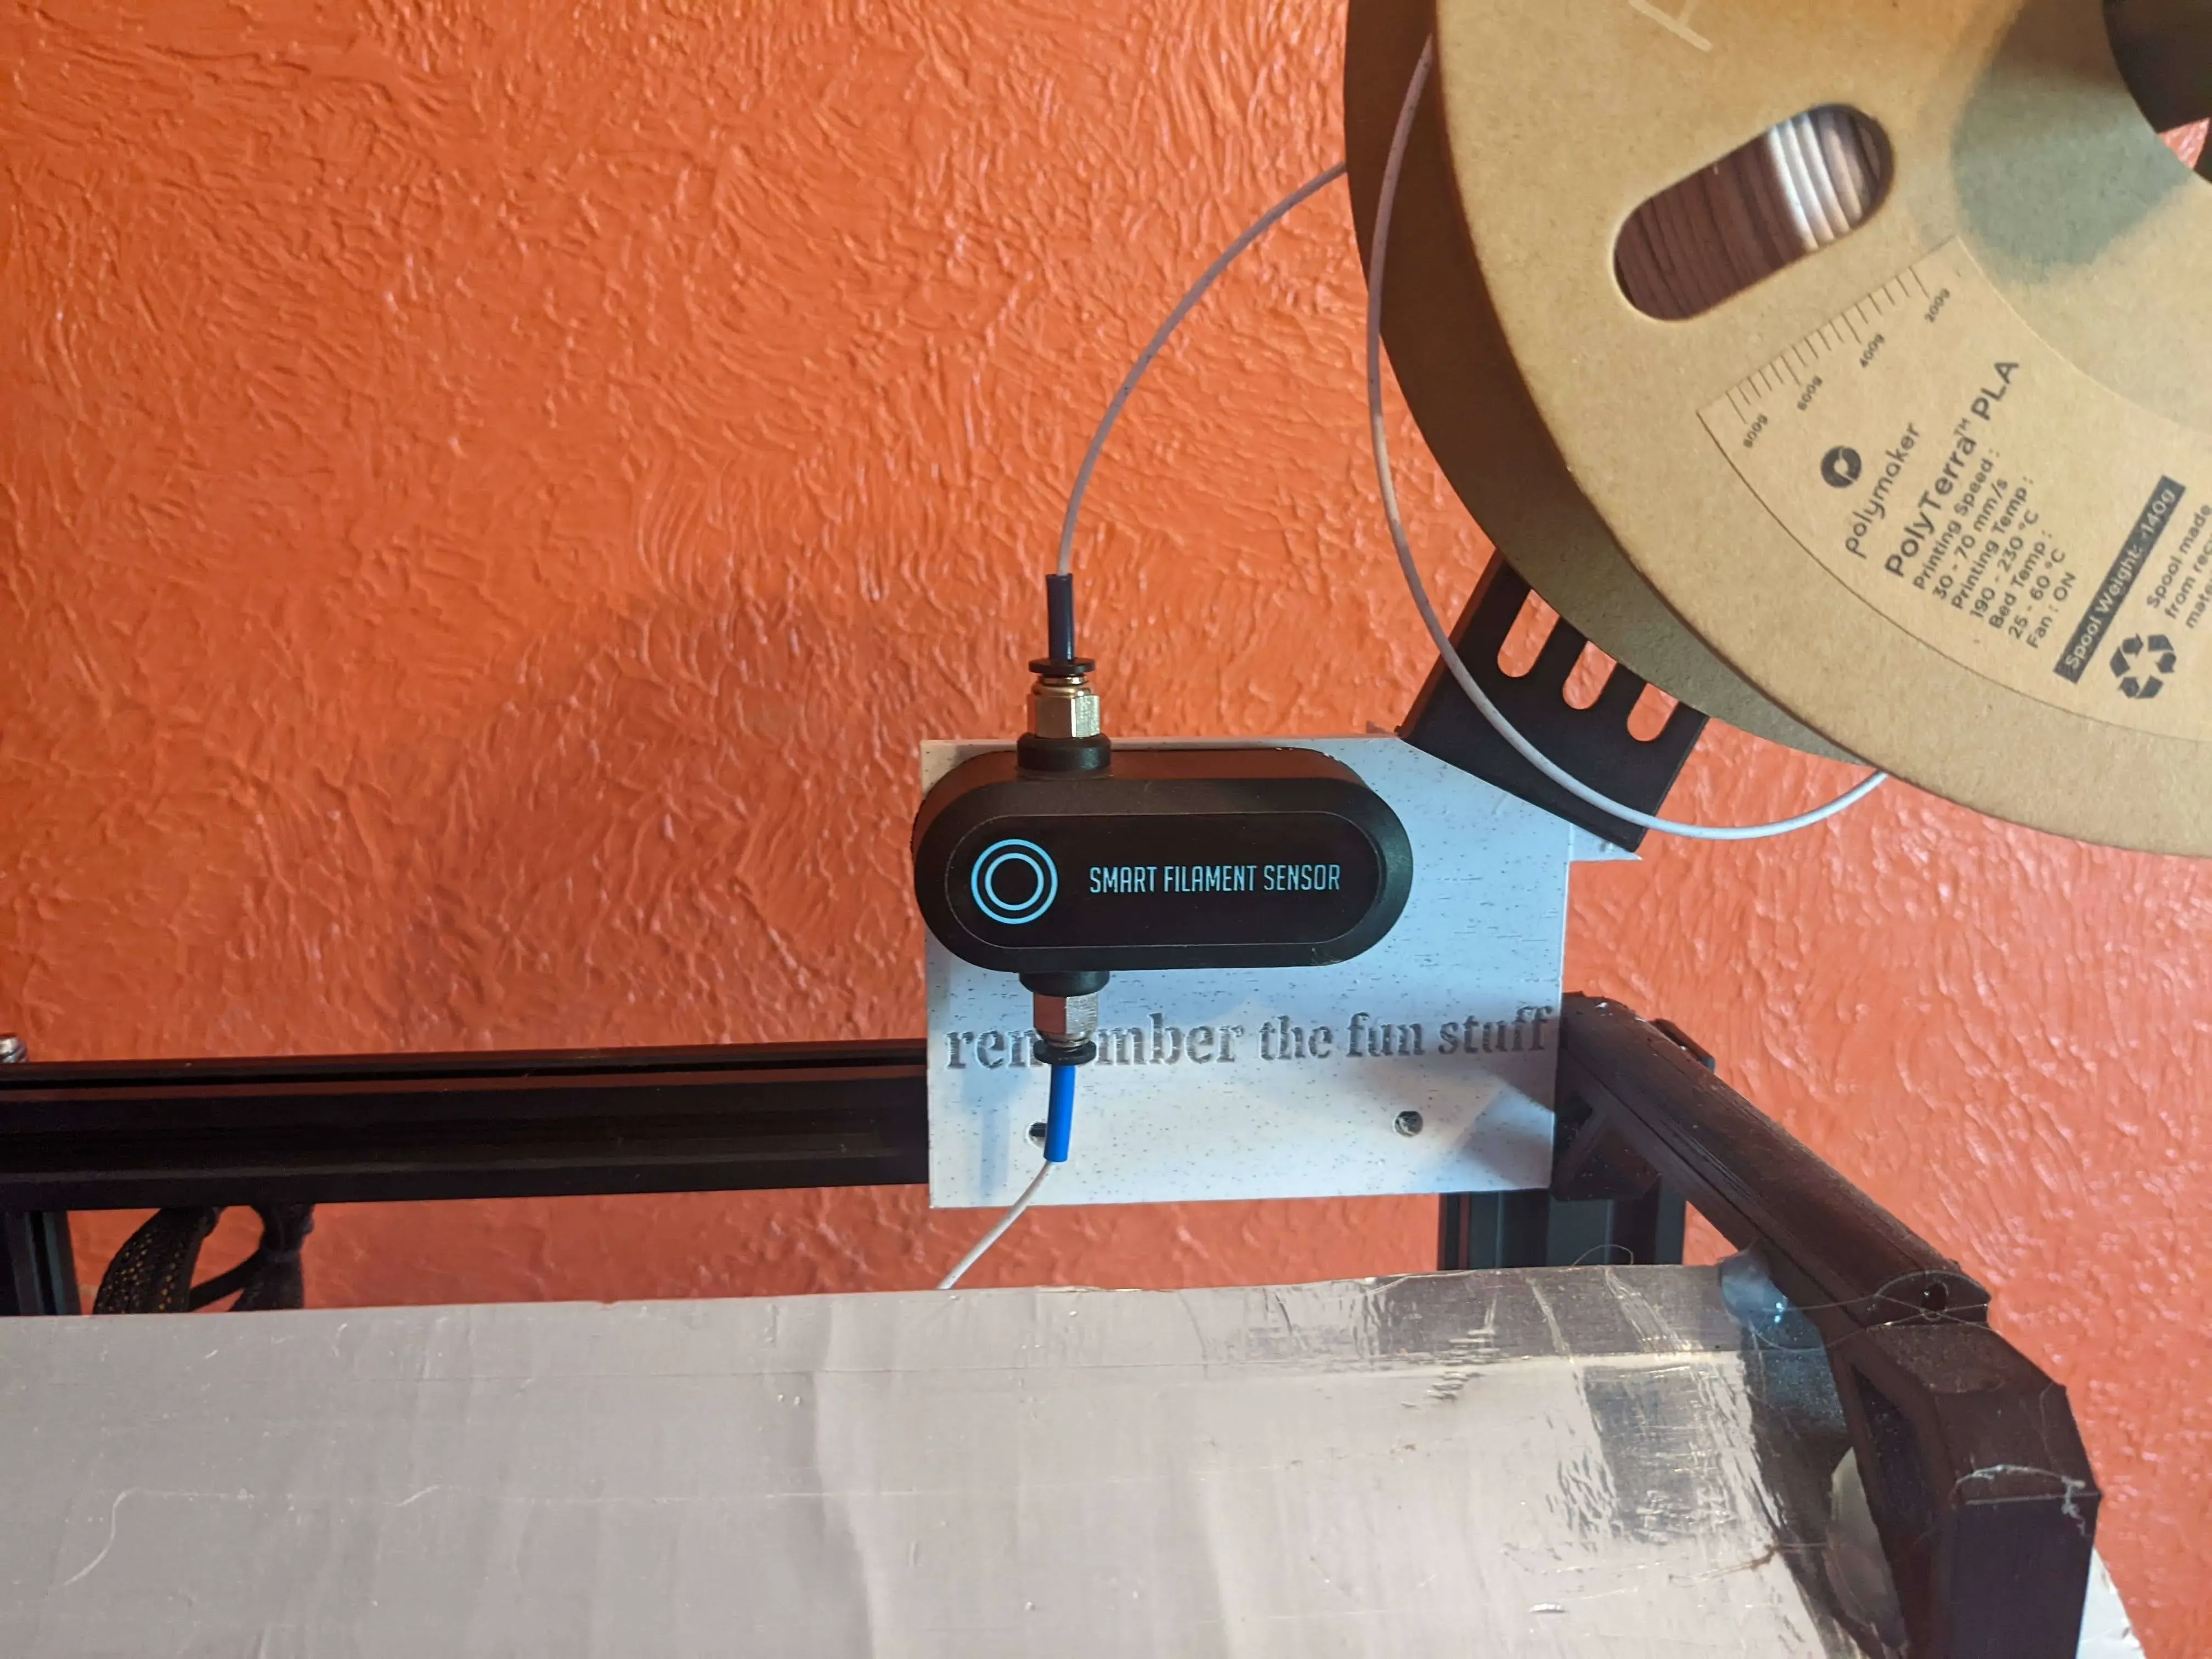 smart filament sensor and stand